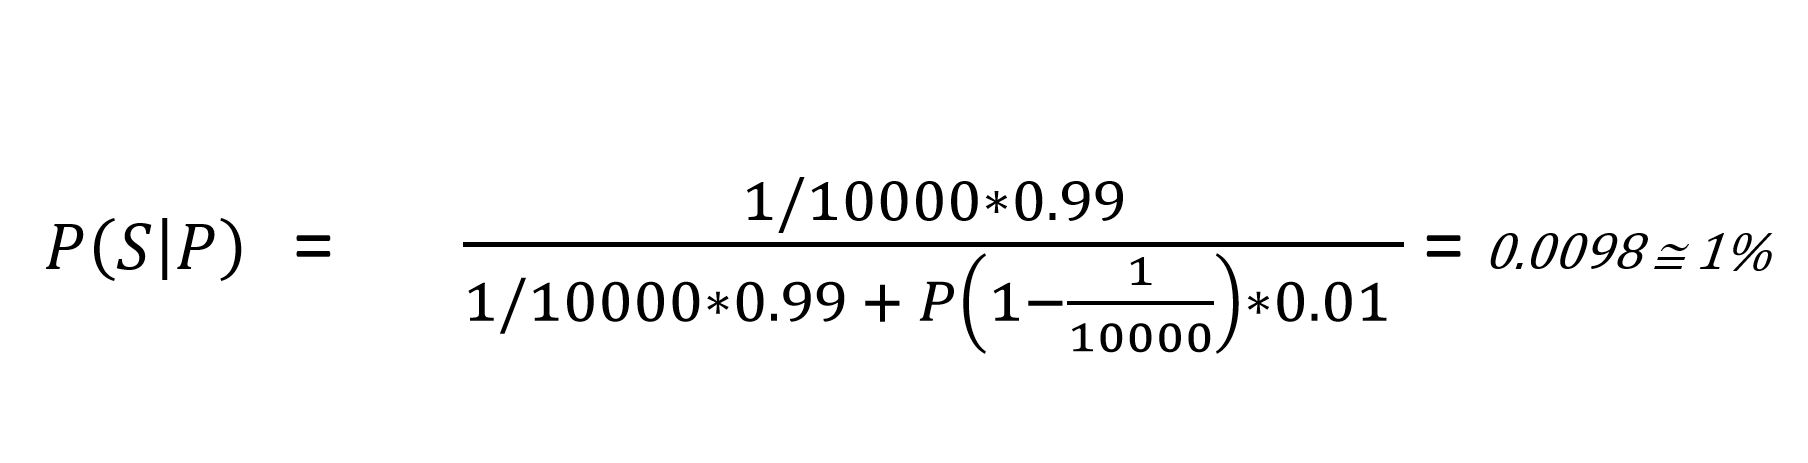 calculation-2